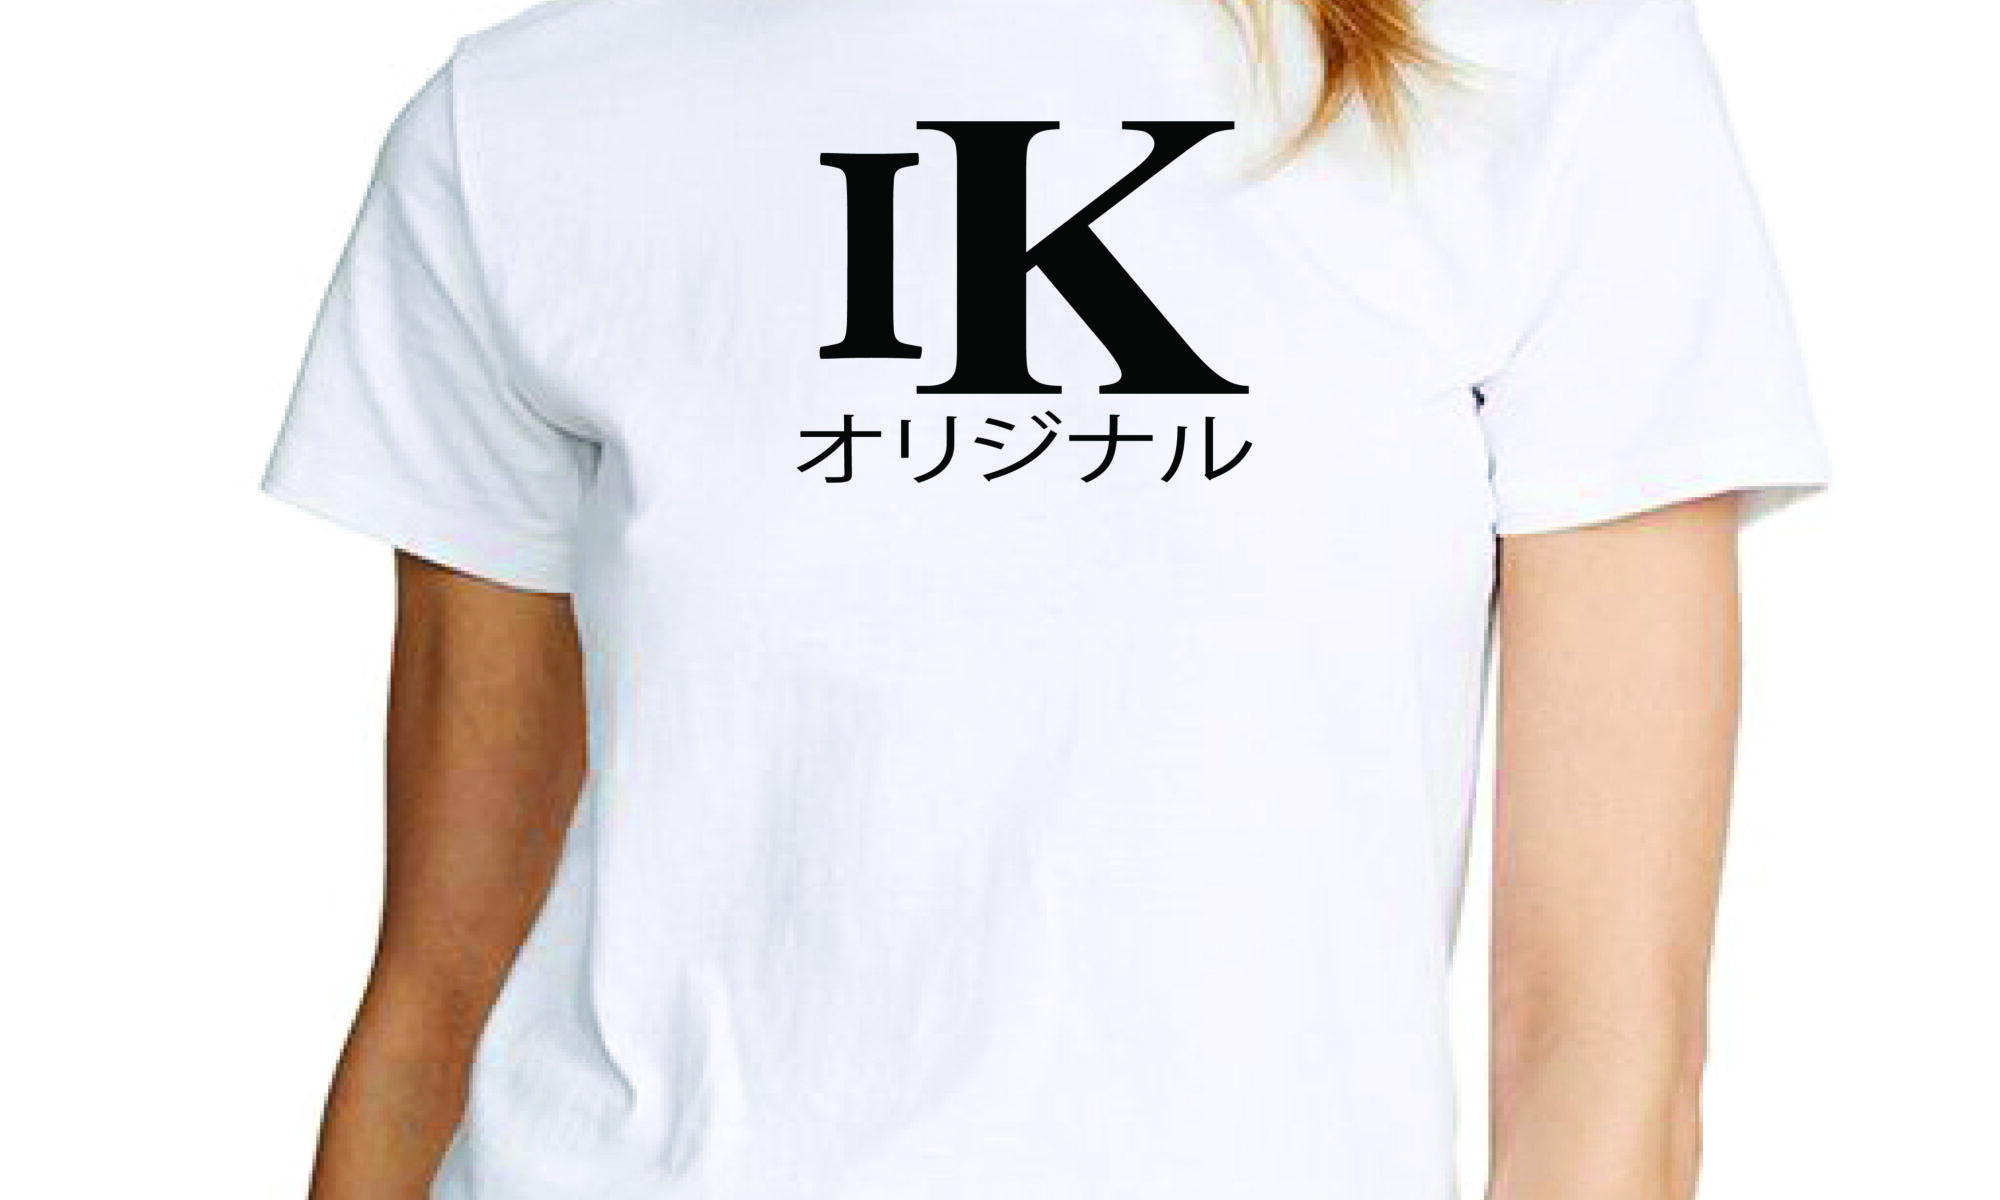 IK Original Japan Woman White T Shirt